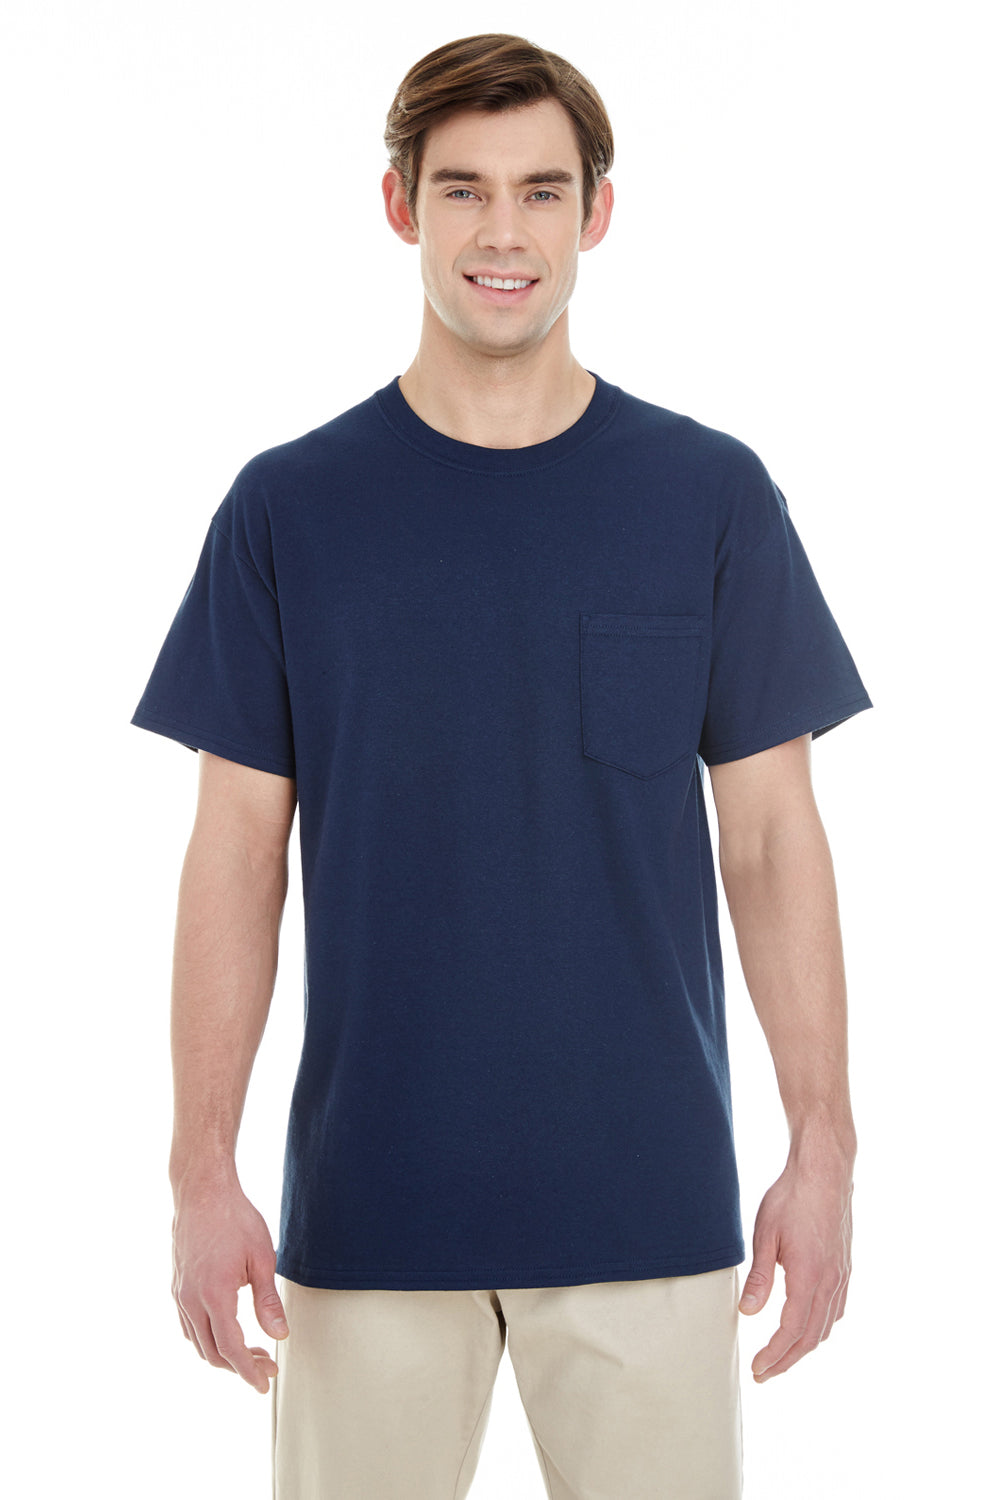 Gildan G530 Mens Short Sleeve Crewneck T-Shirt w/ Pocket Navy Blue Front